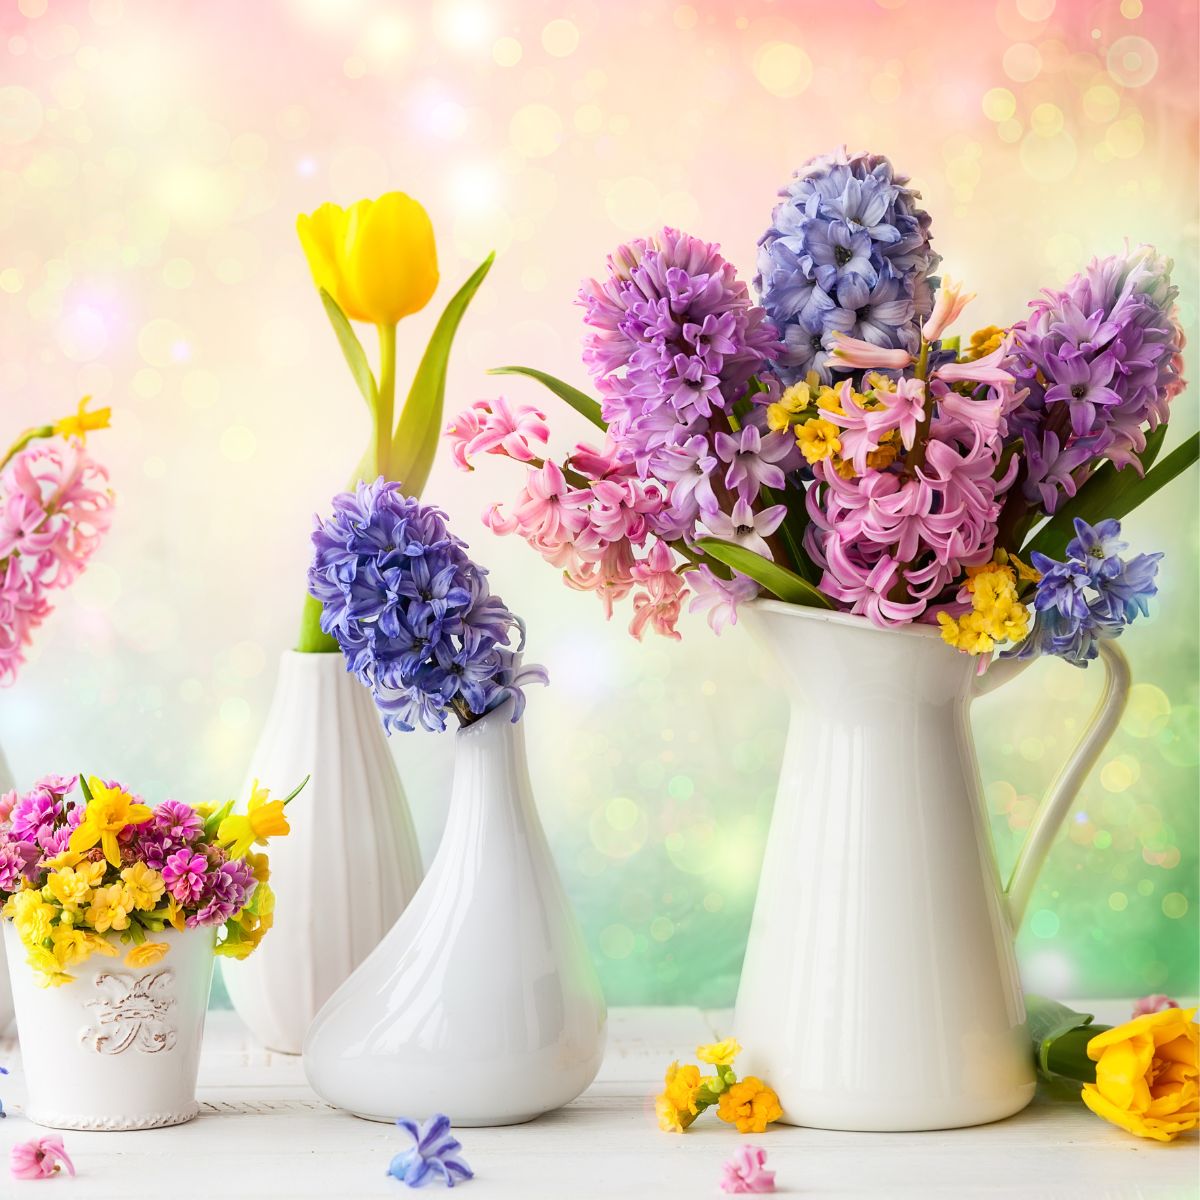 pastel-colored spring flowers in white ceramic vases.